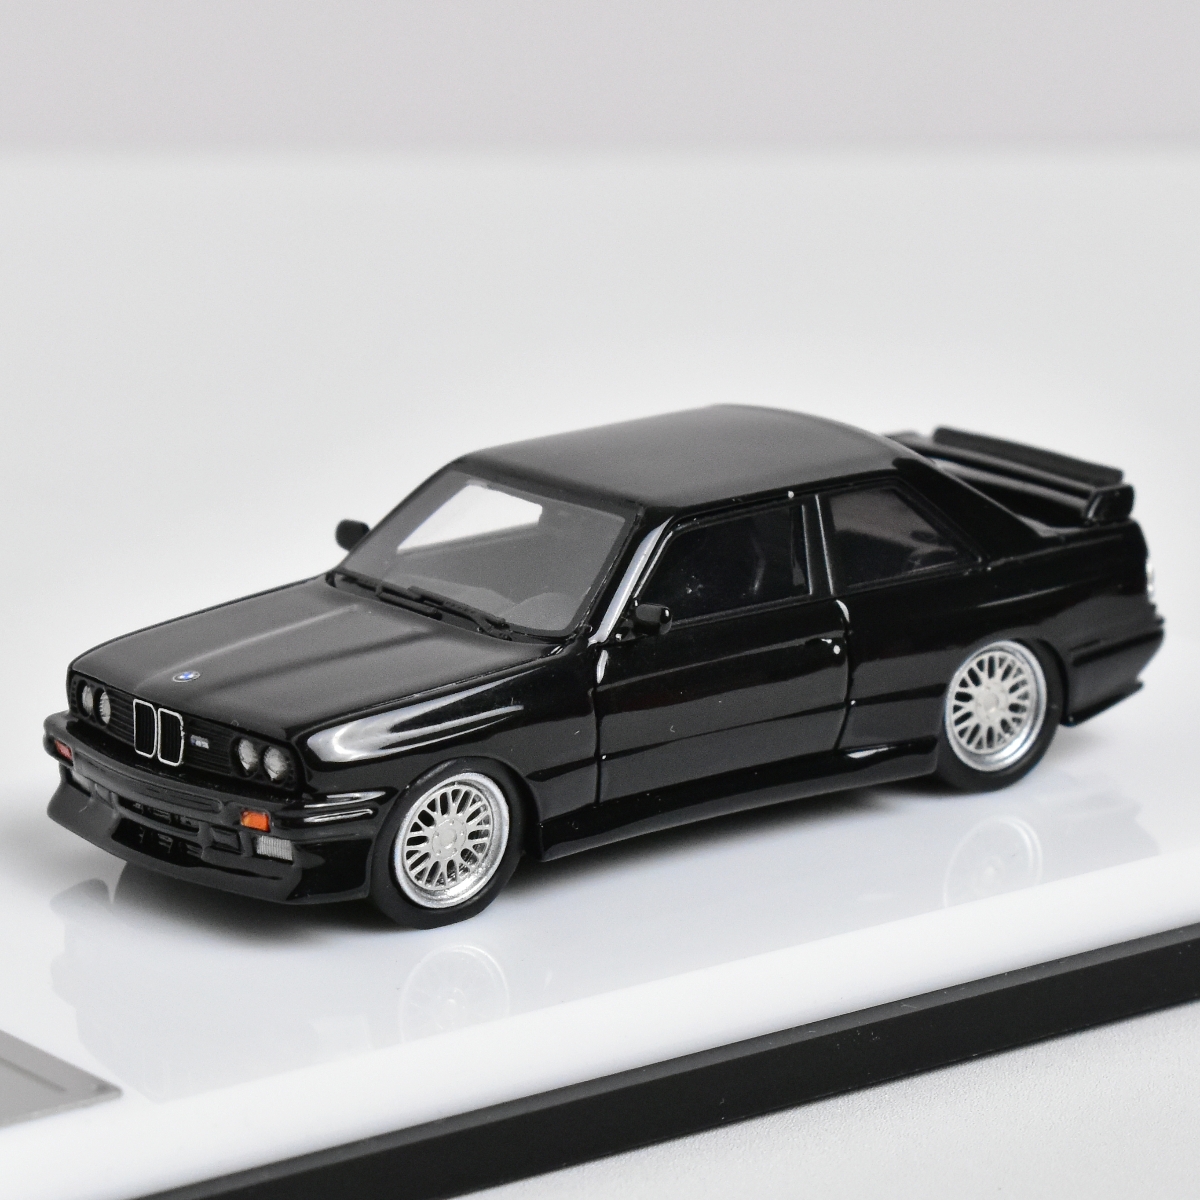 SM ScaleMini 1:64 宝马M3 E30 收藏摆件 黑色 树脂汽车模型 玩具/童车/益智/积木/模型 合金车/玩具仿真车/收藏车模 原图主图